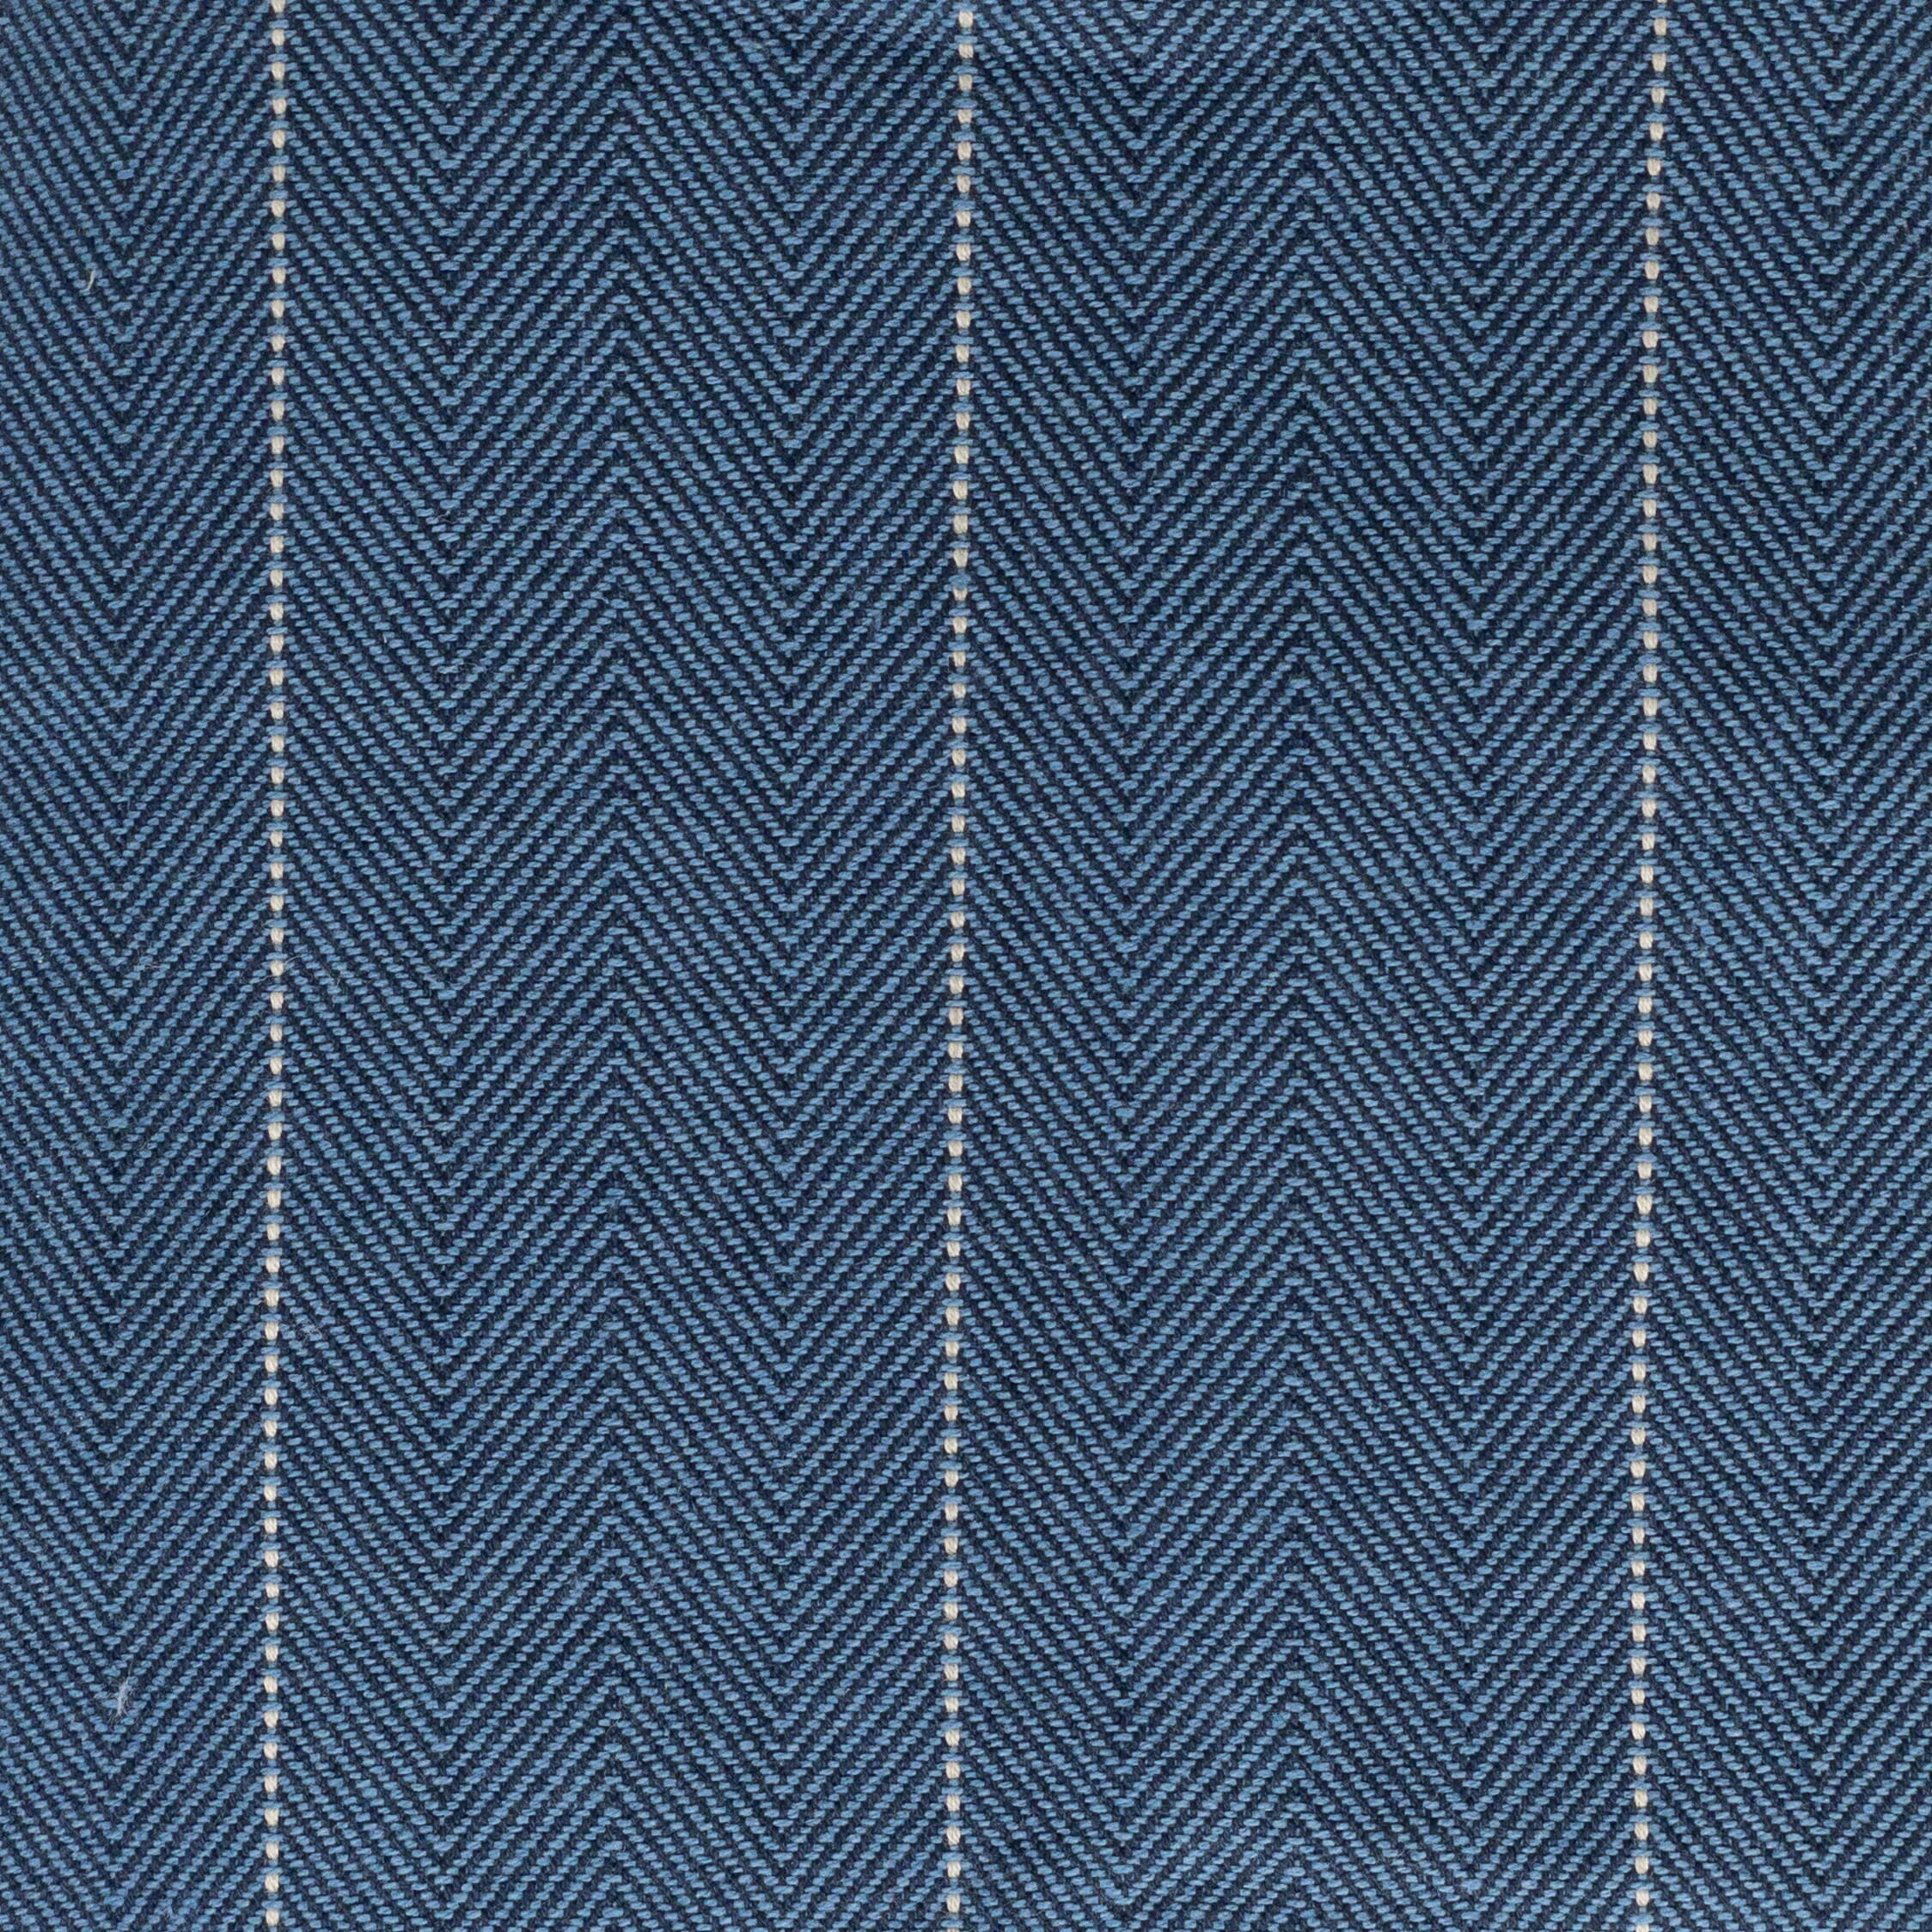 Tulsa 2 Blueberry by Stout Fabric